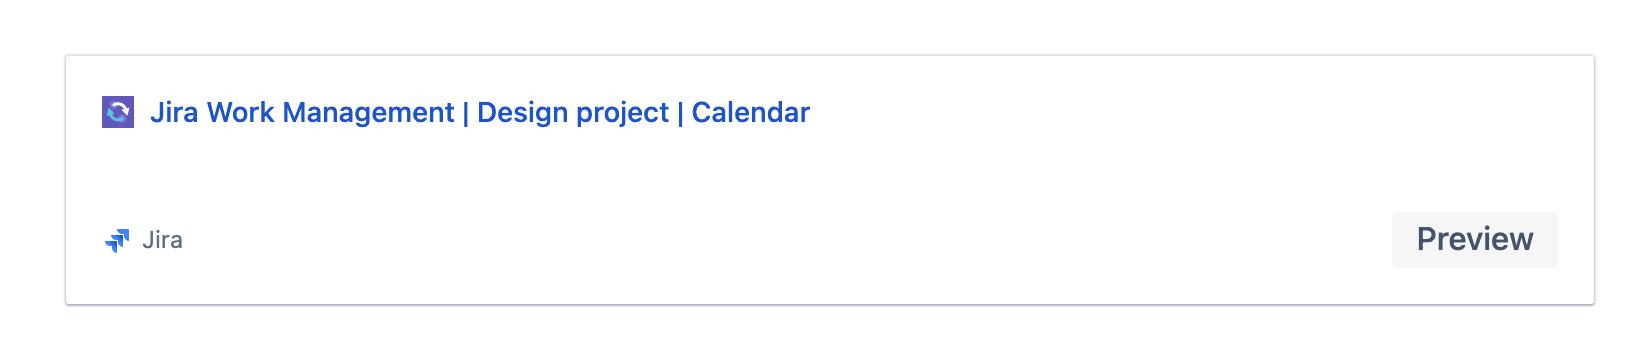 alt="A smart link card for the calendar."